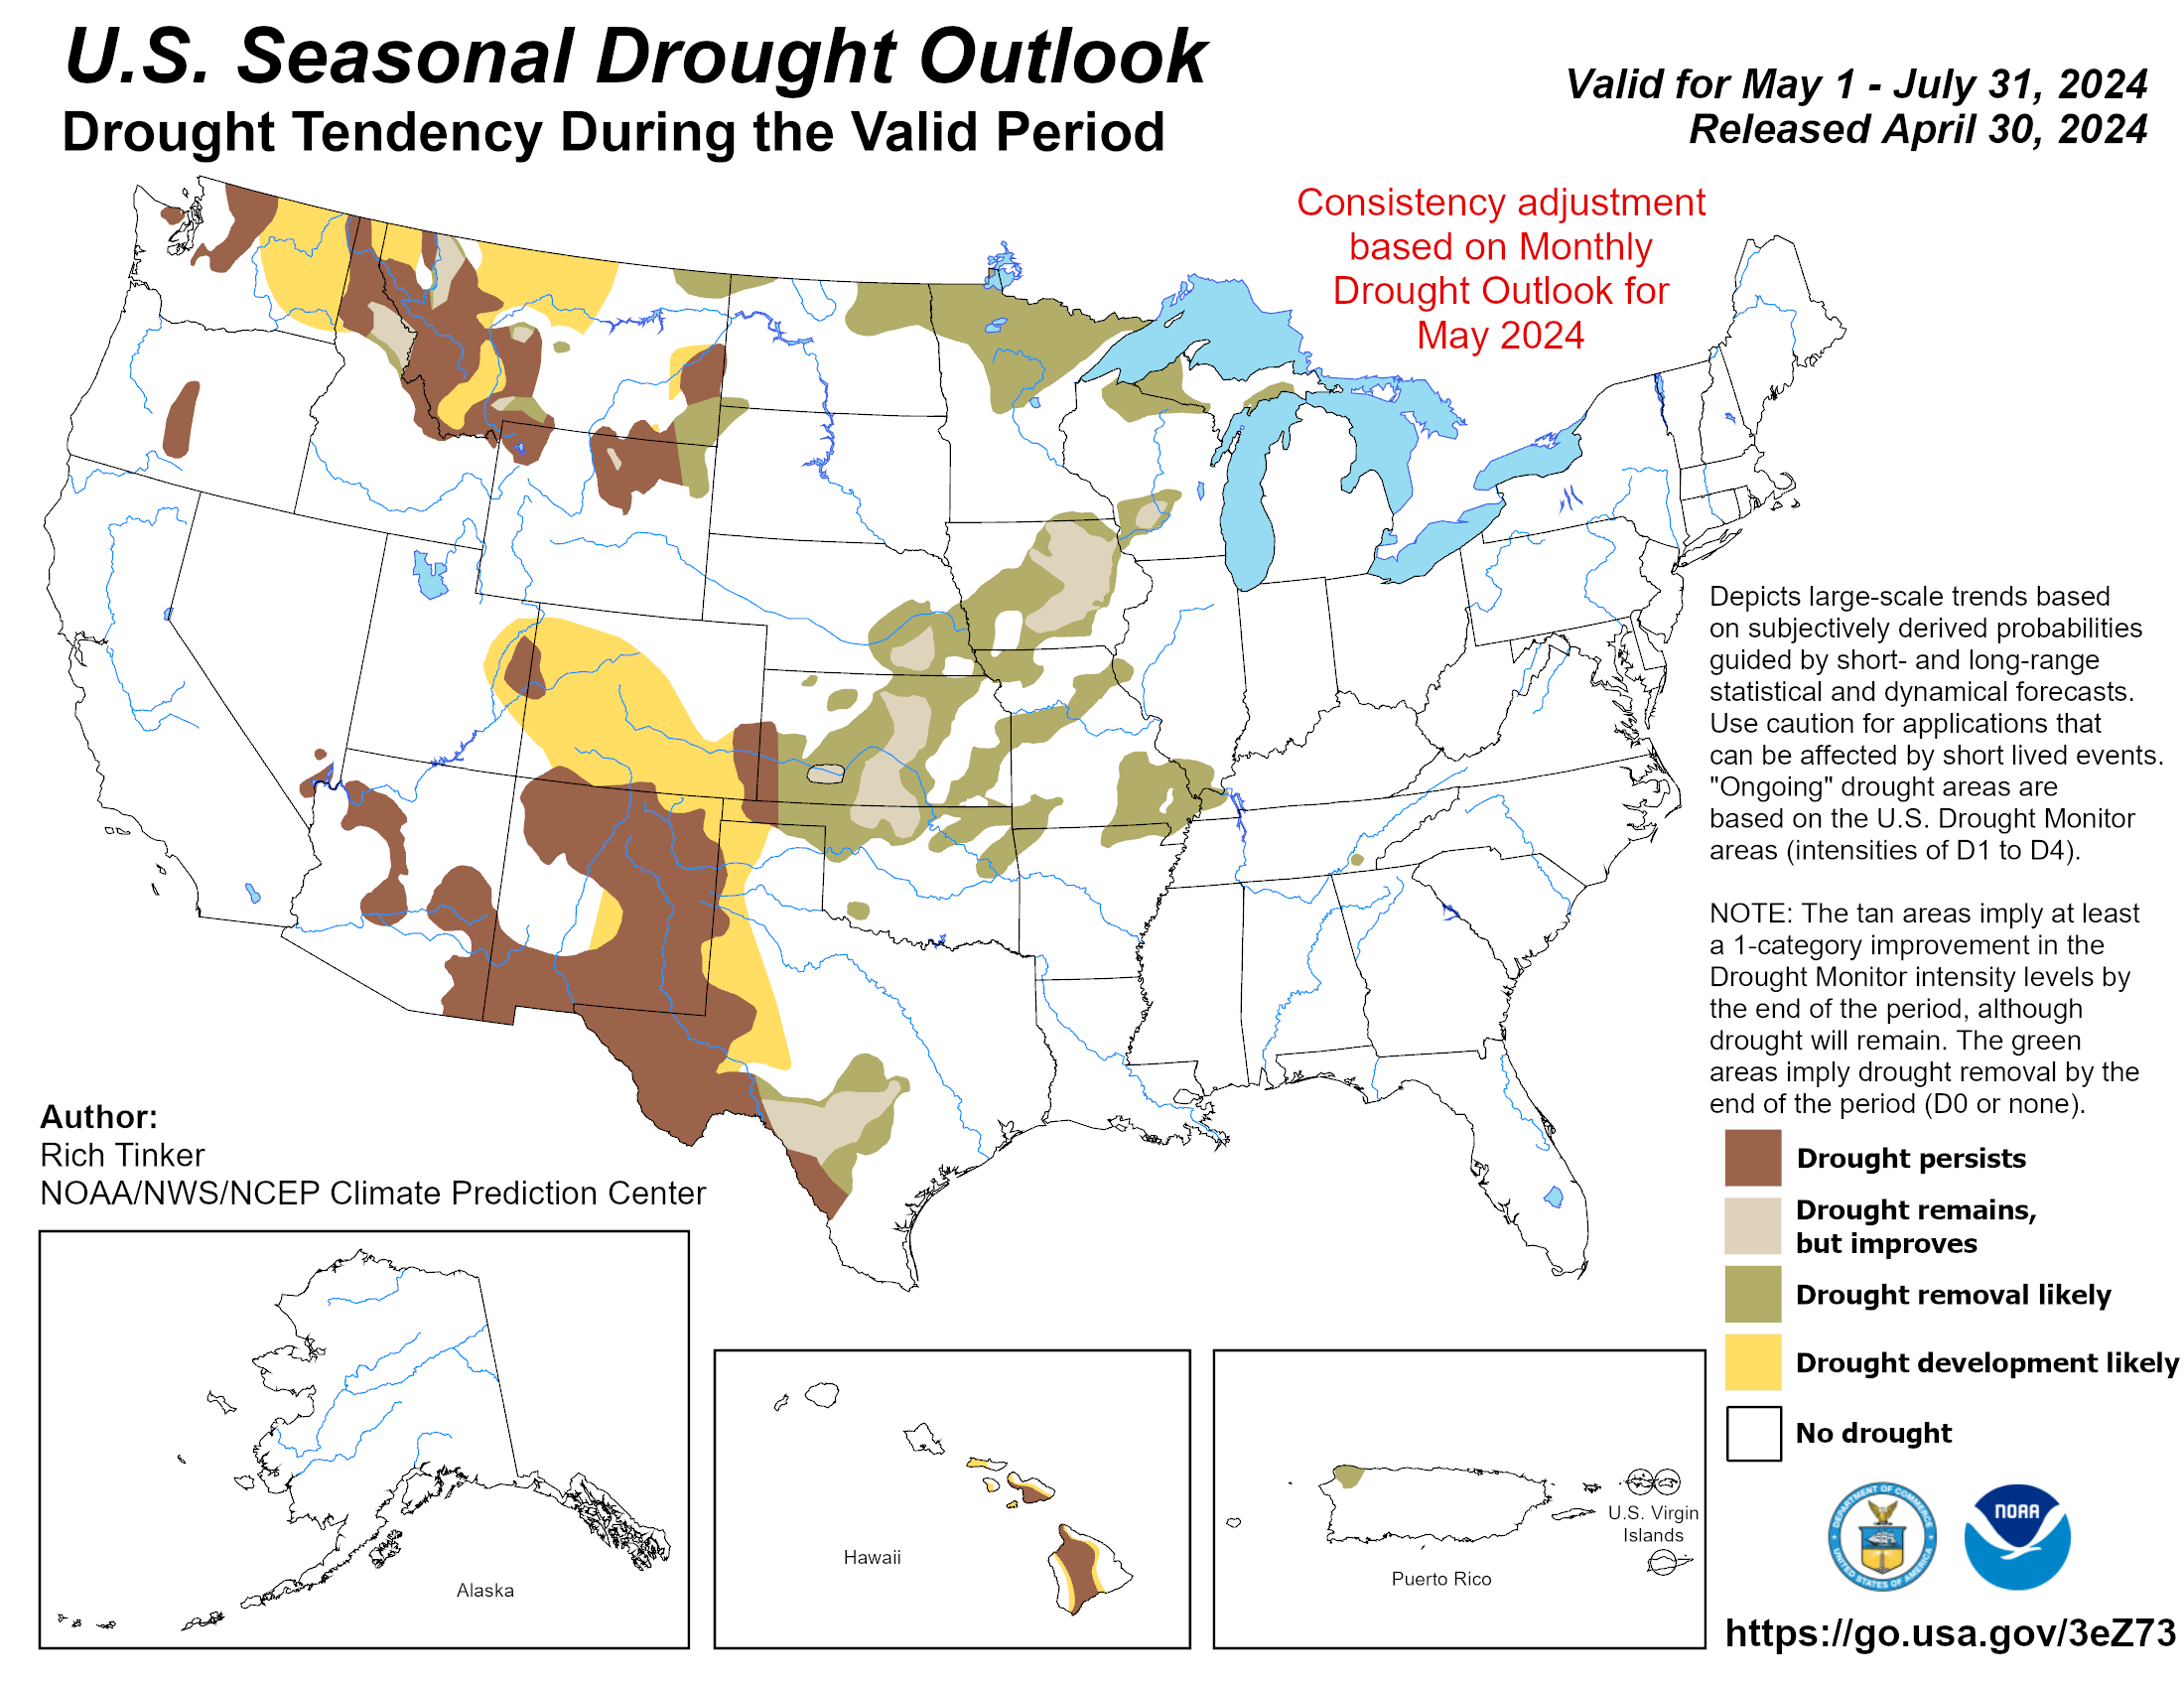 U.S. Drought Outlook - CPC